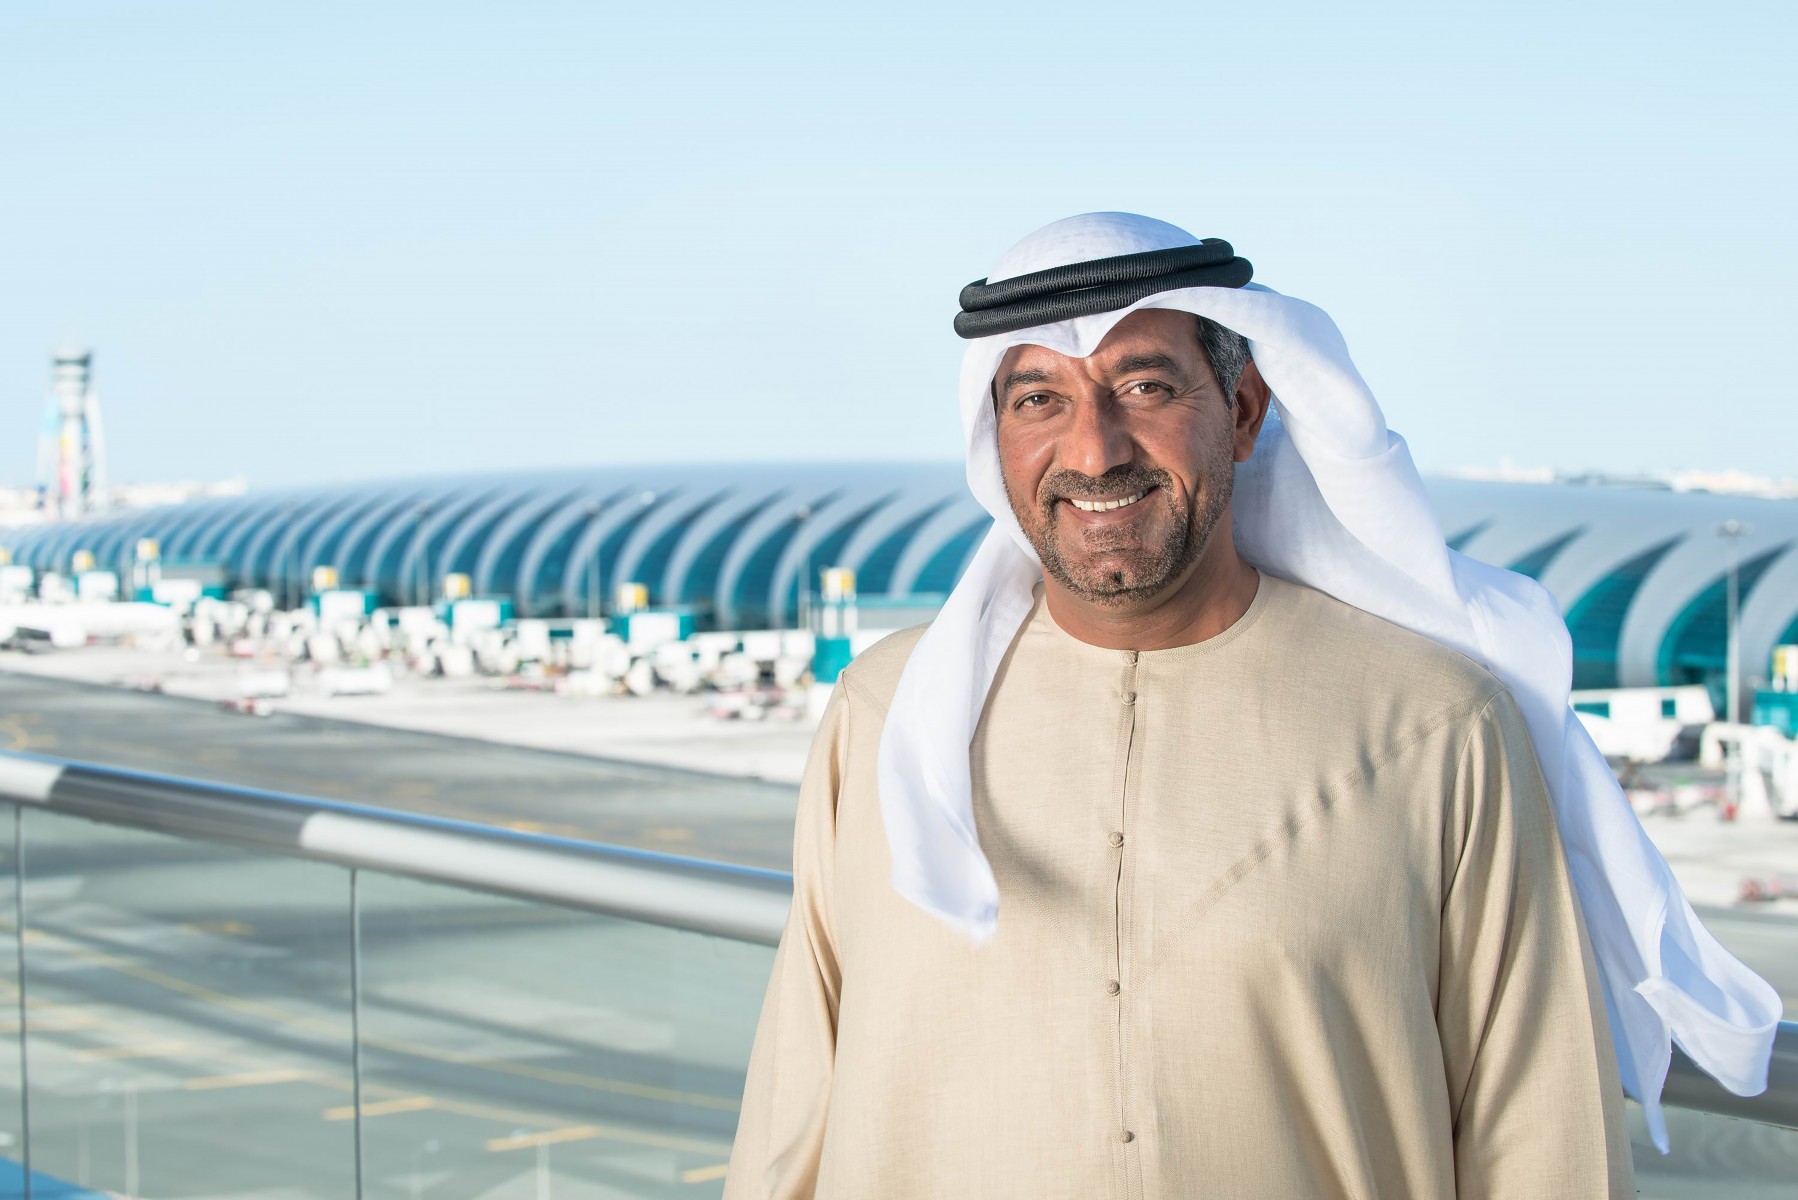 His Highness Sheikh Ahmed bin Saeed Al Maktoum